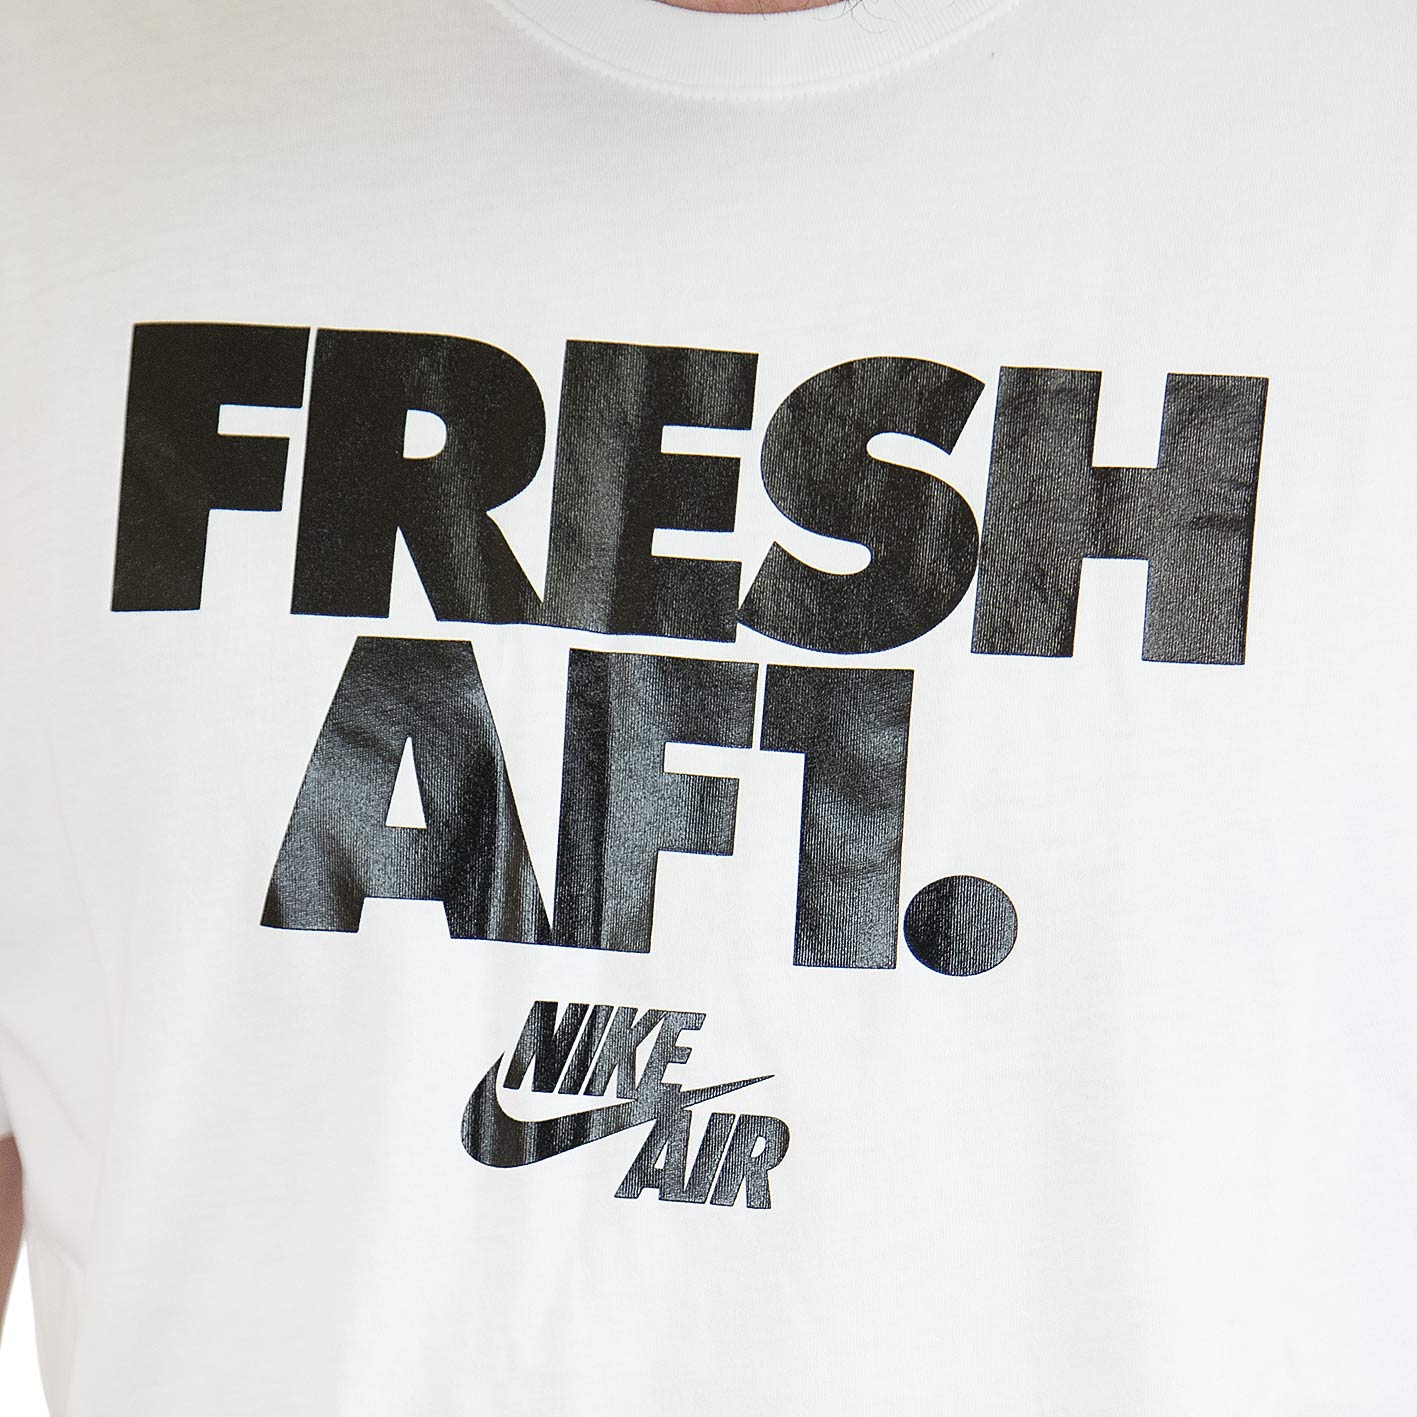 fresh af1 shirt